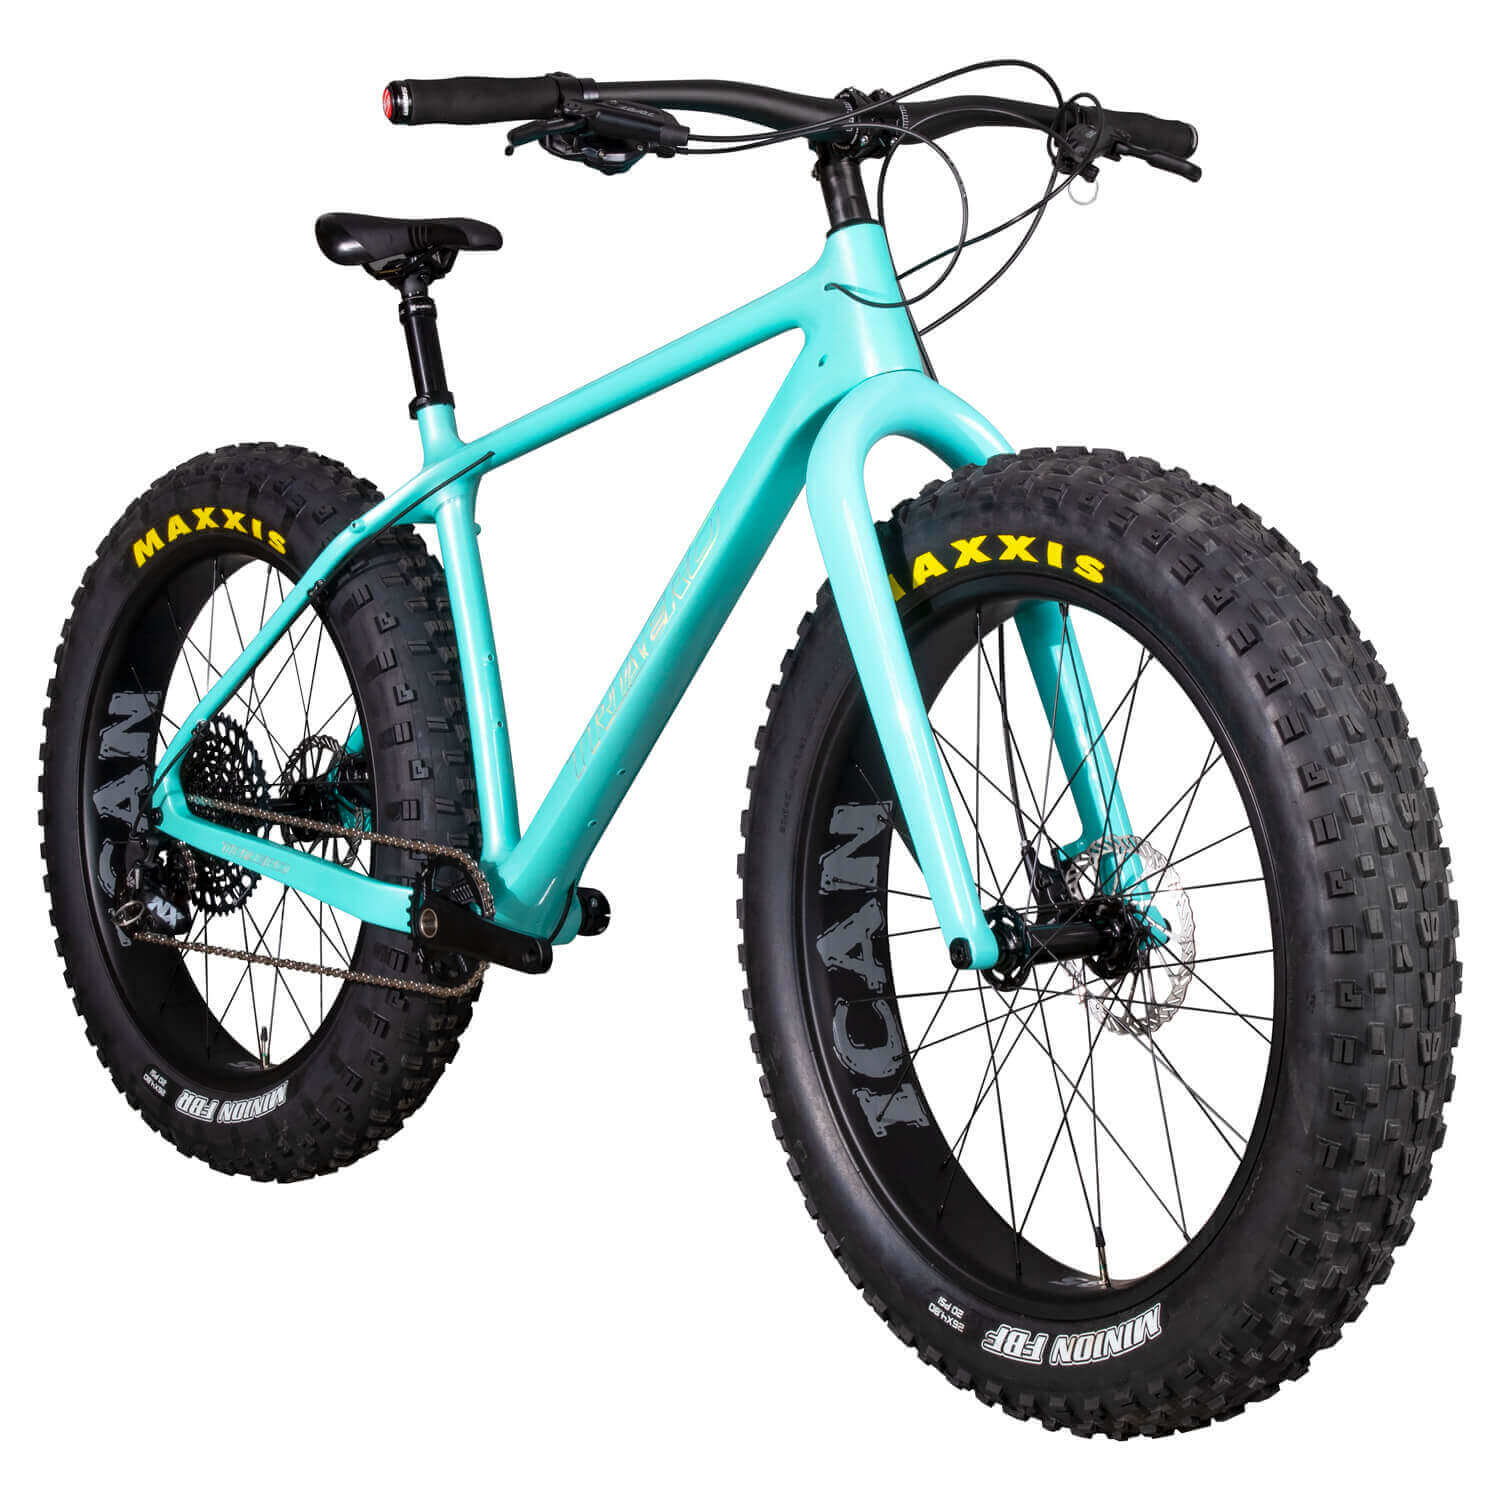 26er Carbon Hardtail Fat Bike/Snow Bike SN01 with Shimano Groupset